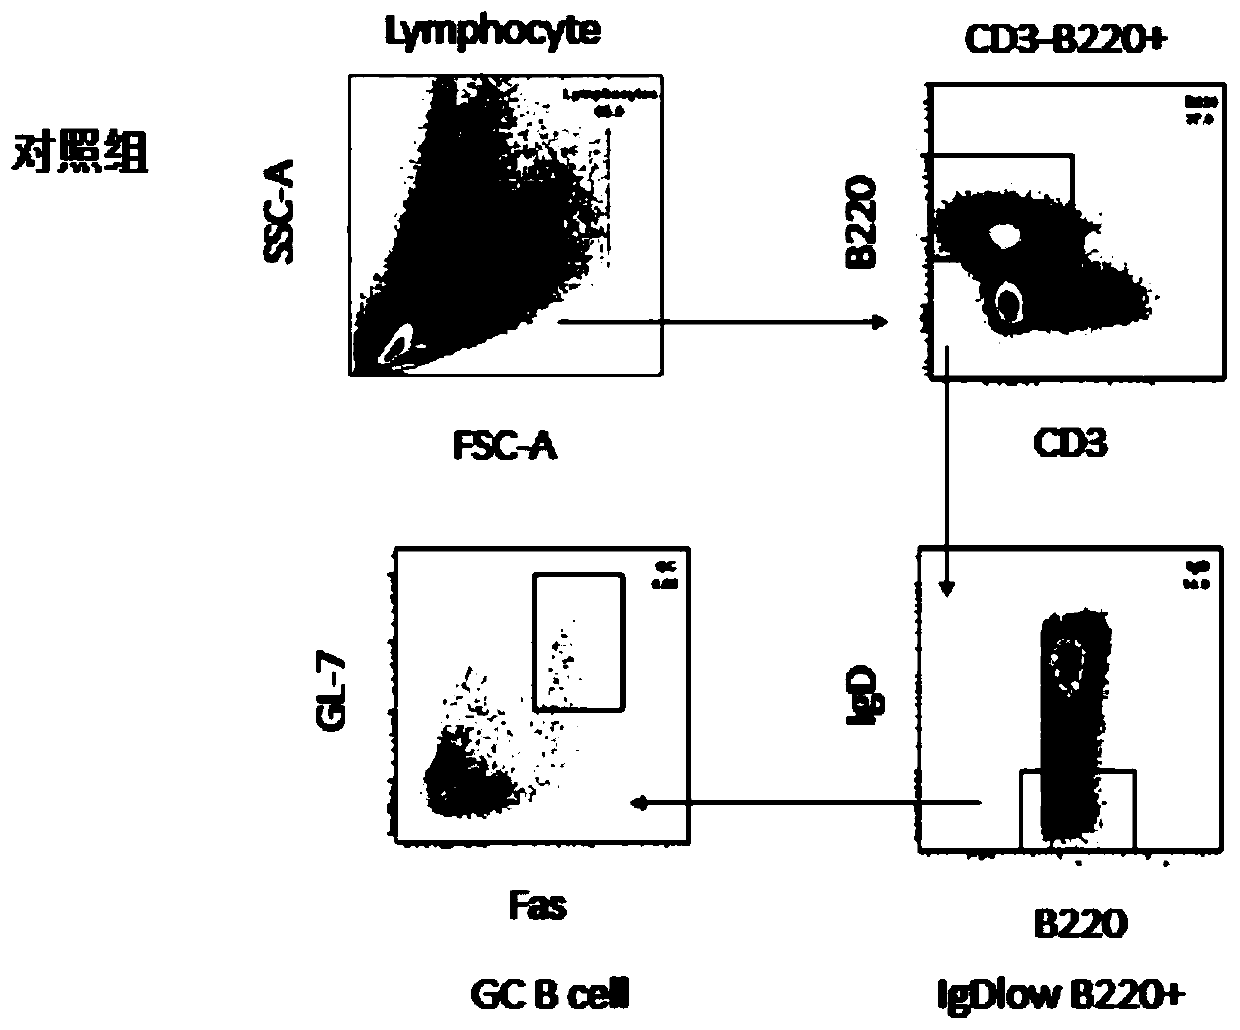 CD127 resisting antibody, cell strain for secreting antibody and preparation method and application of antibody